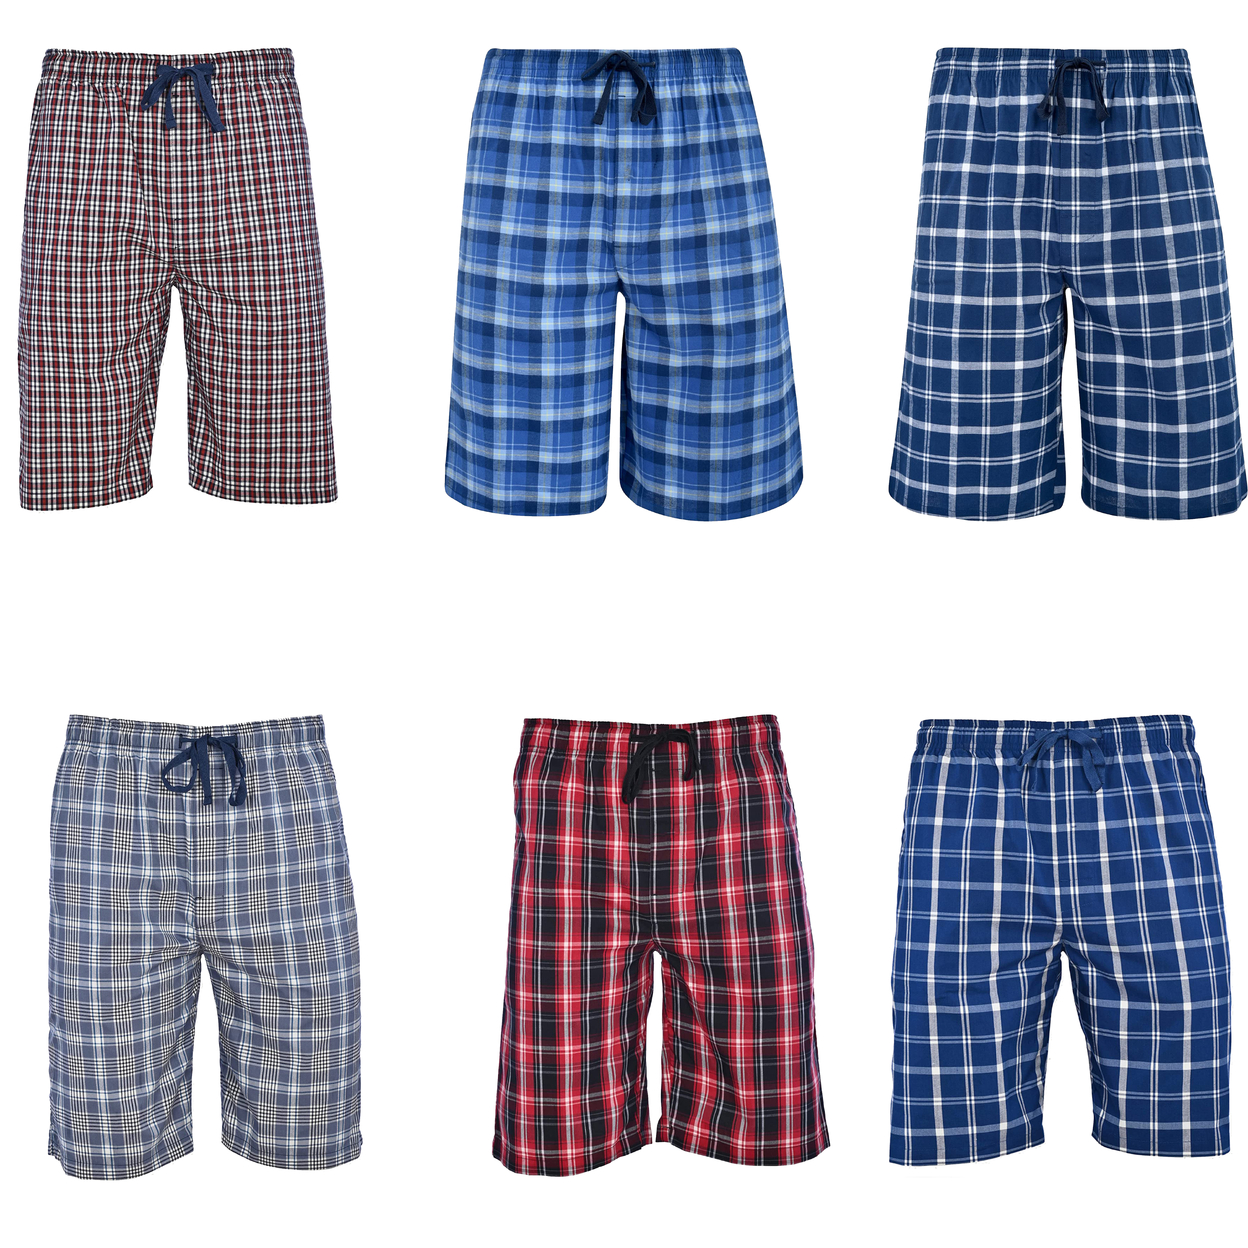 2-Pack: Men's Ultra Soft Plaid Lounge Pajama Sleep Wear Shorts - Black & Grey, Medium